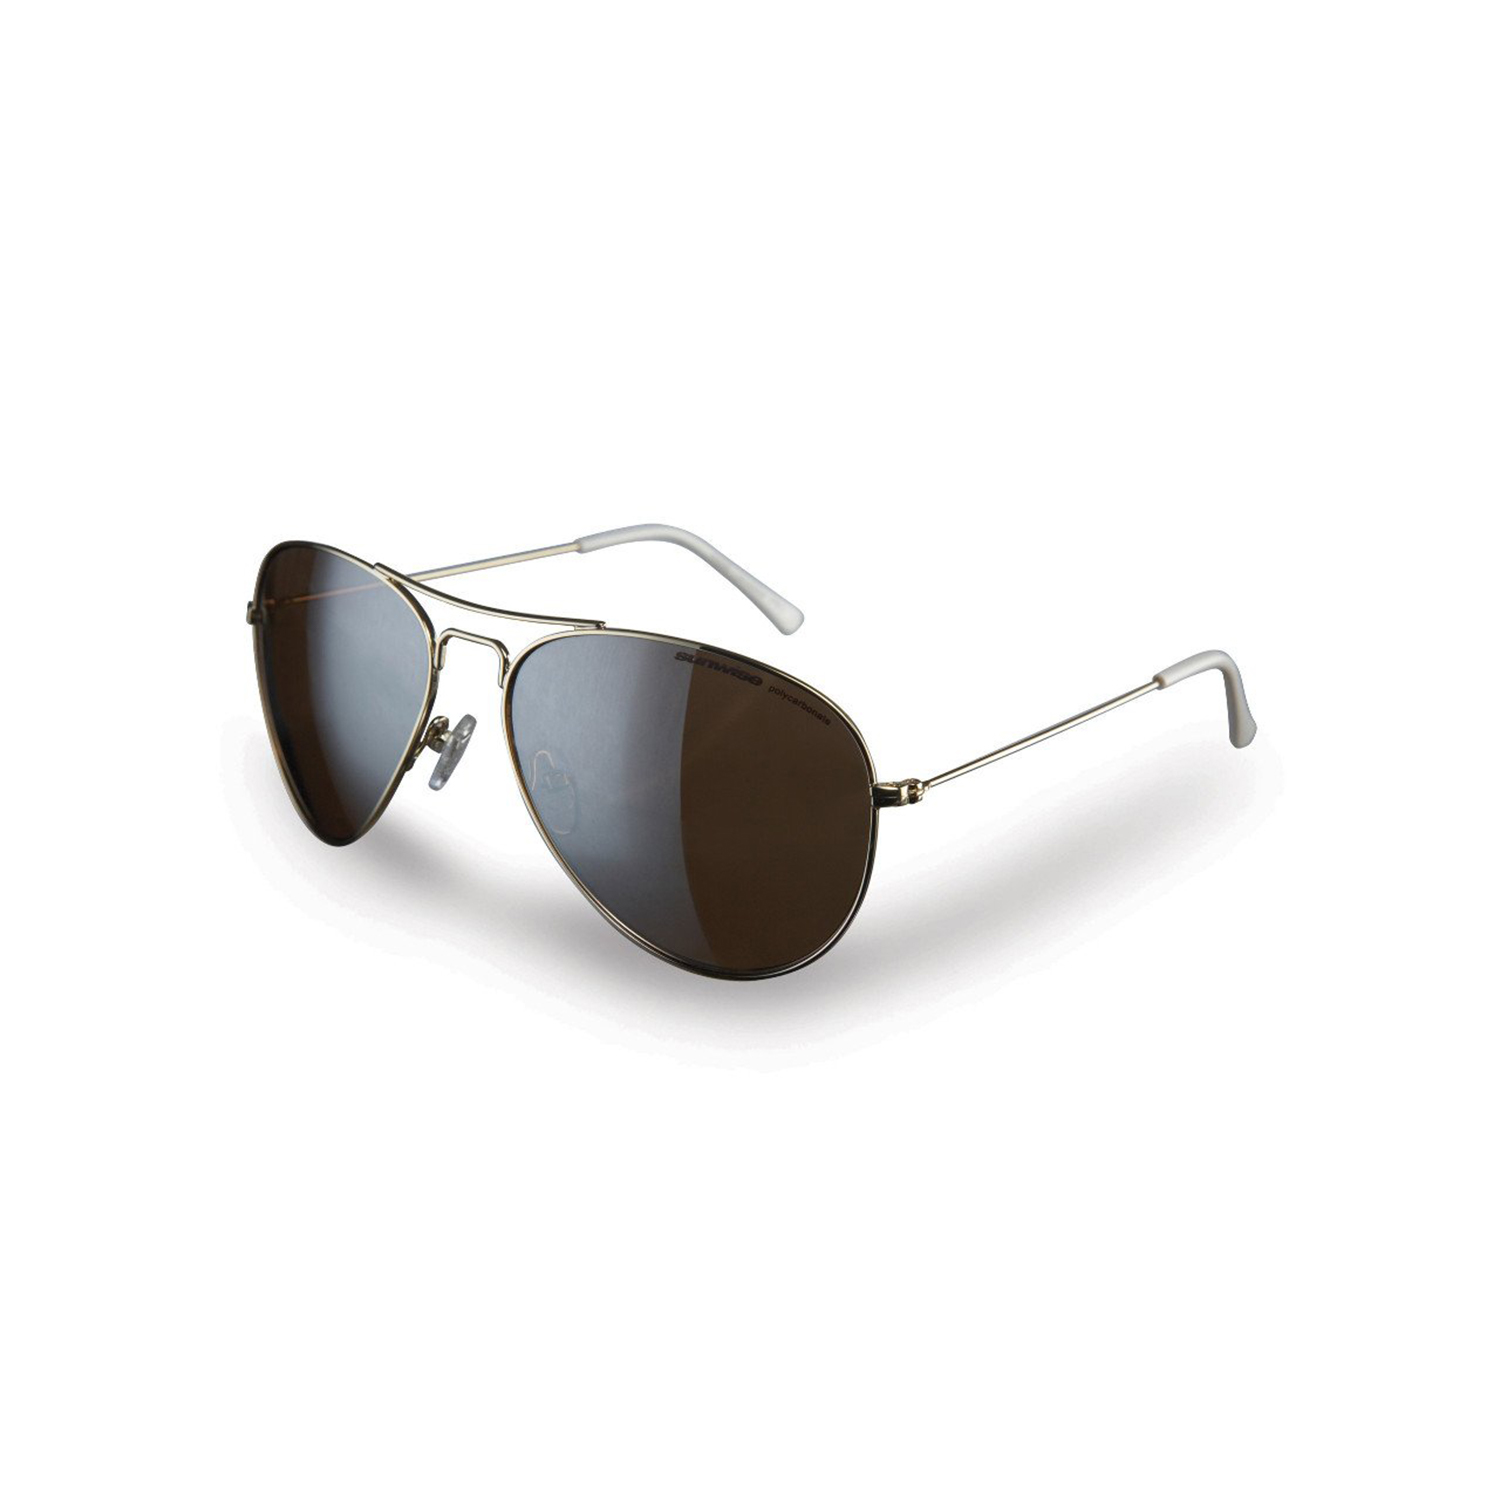 Sunwise Lancaster Sunglasses